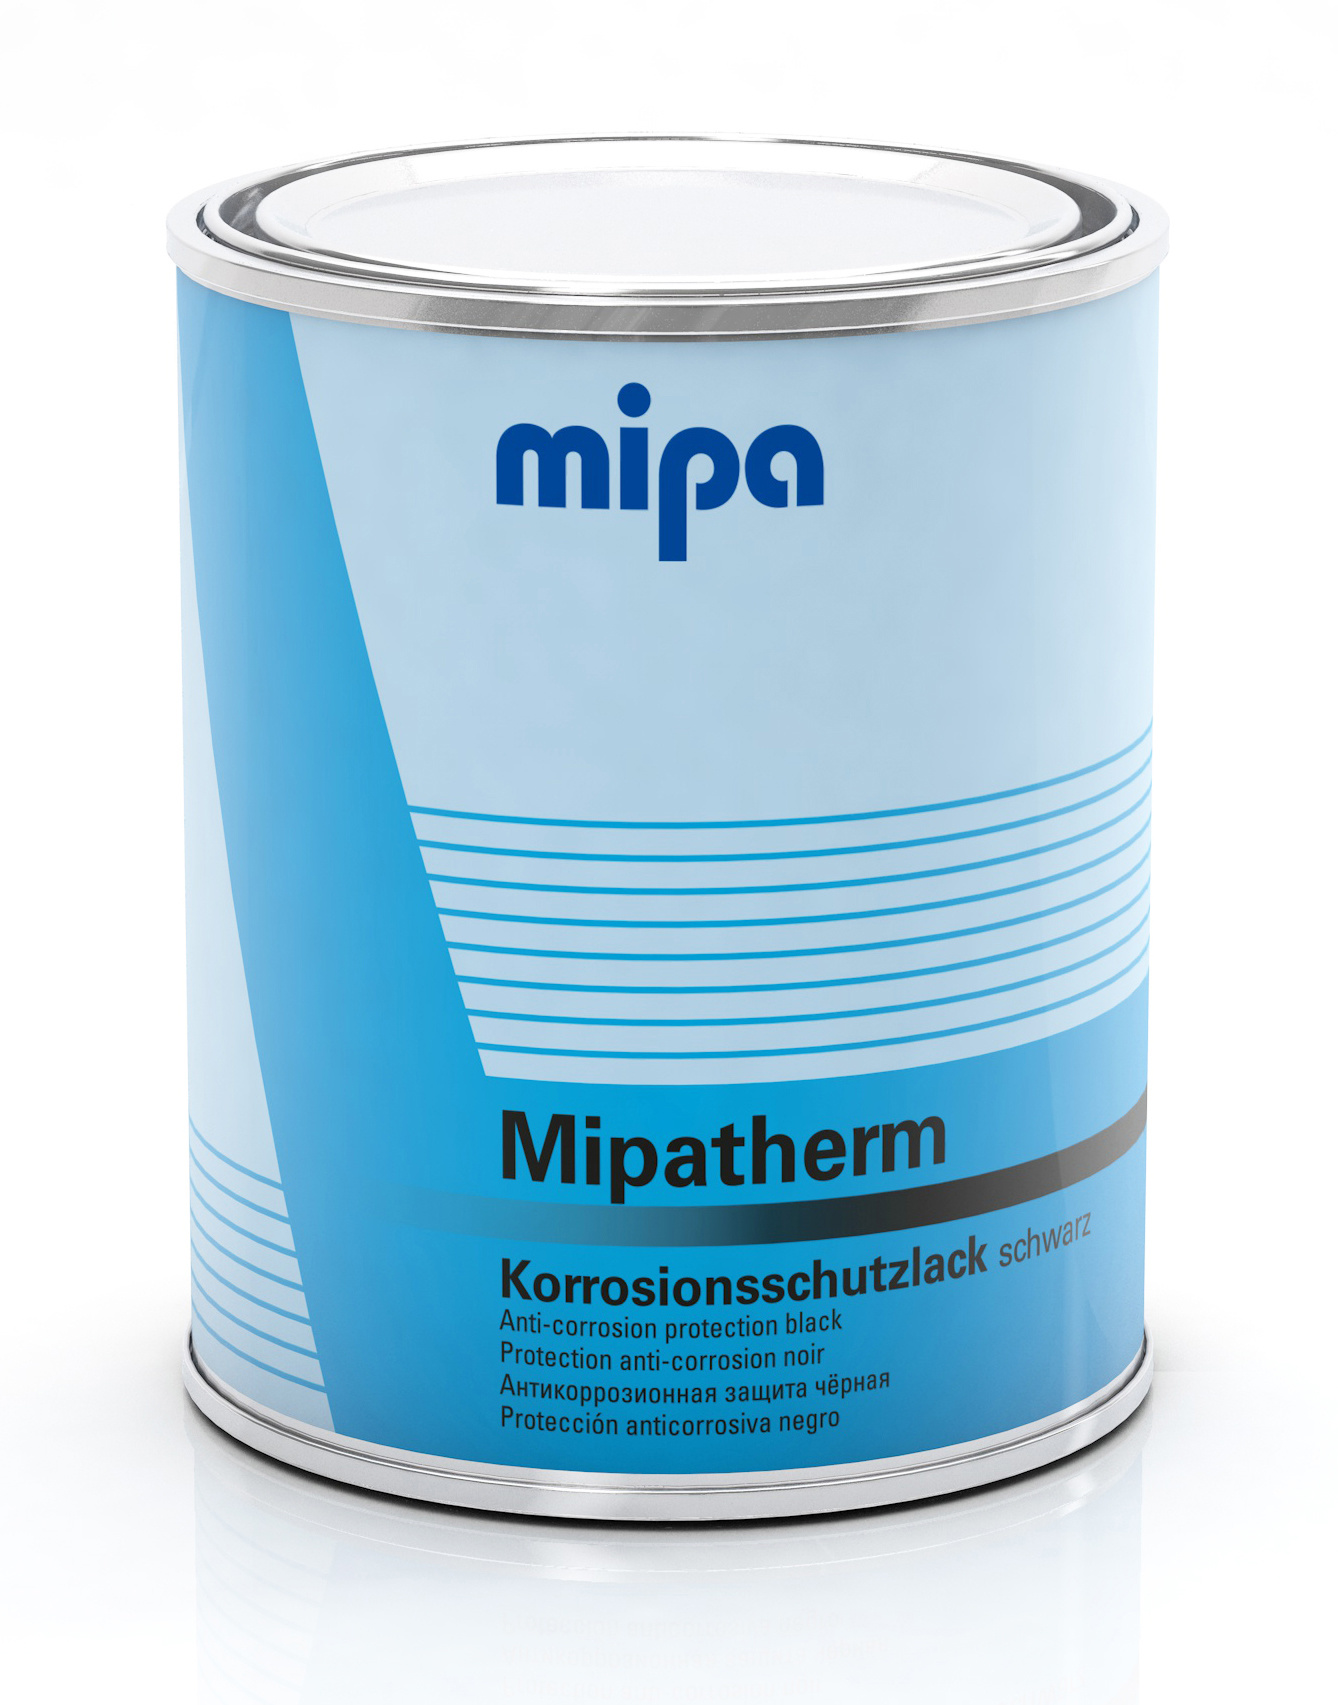 Mipa-Therm hittebestendige lak 800°C EuroProfs Webshop